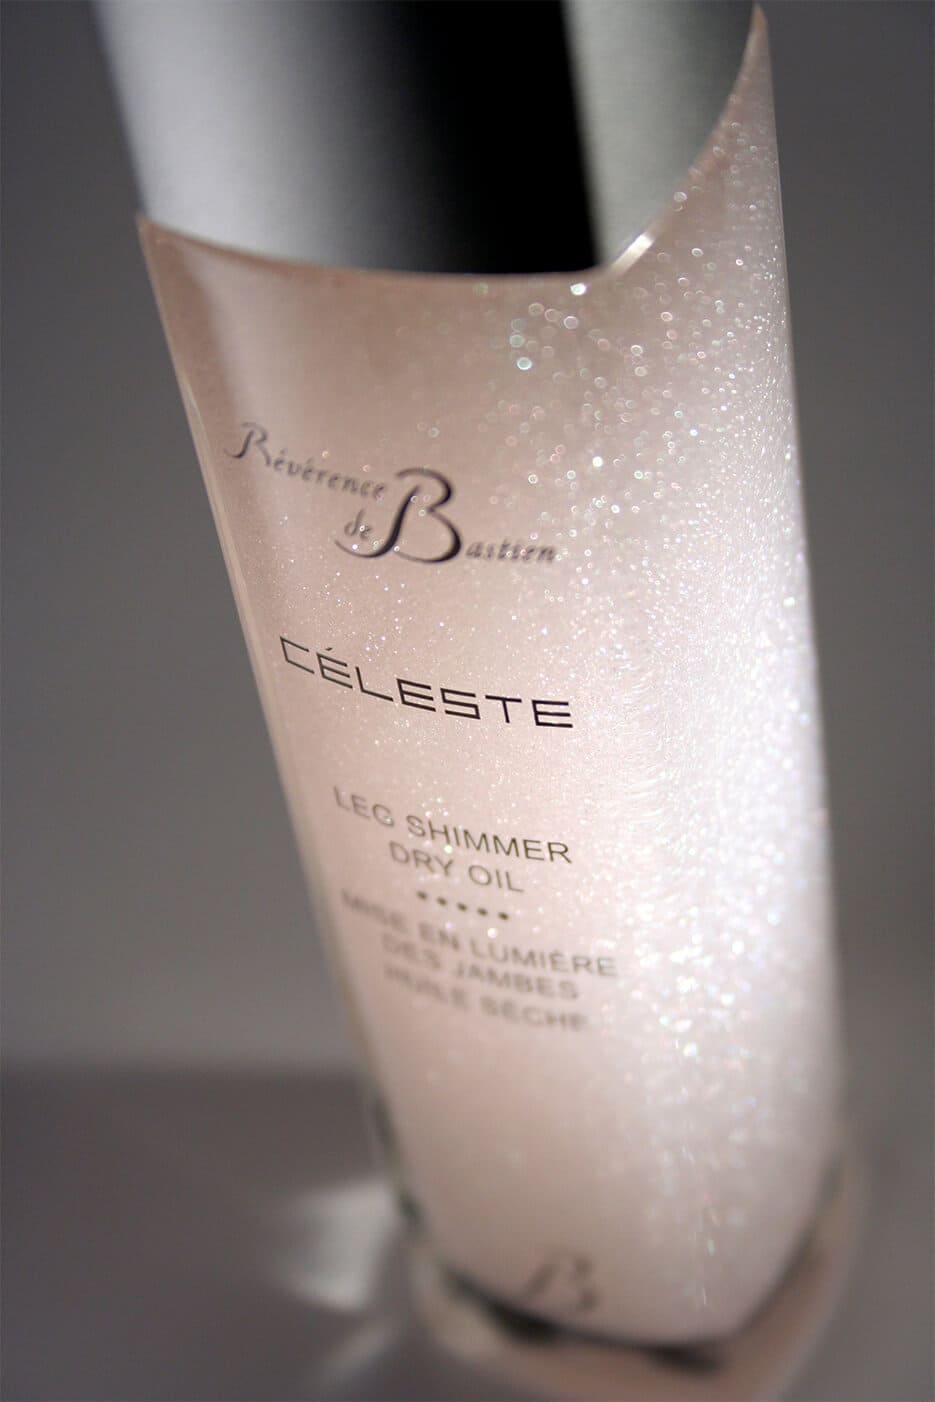 Celeste - Trockenöl | Révérence de Bastien | Look Beautiful Products